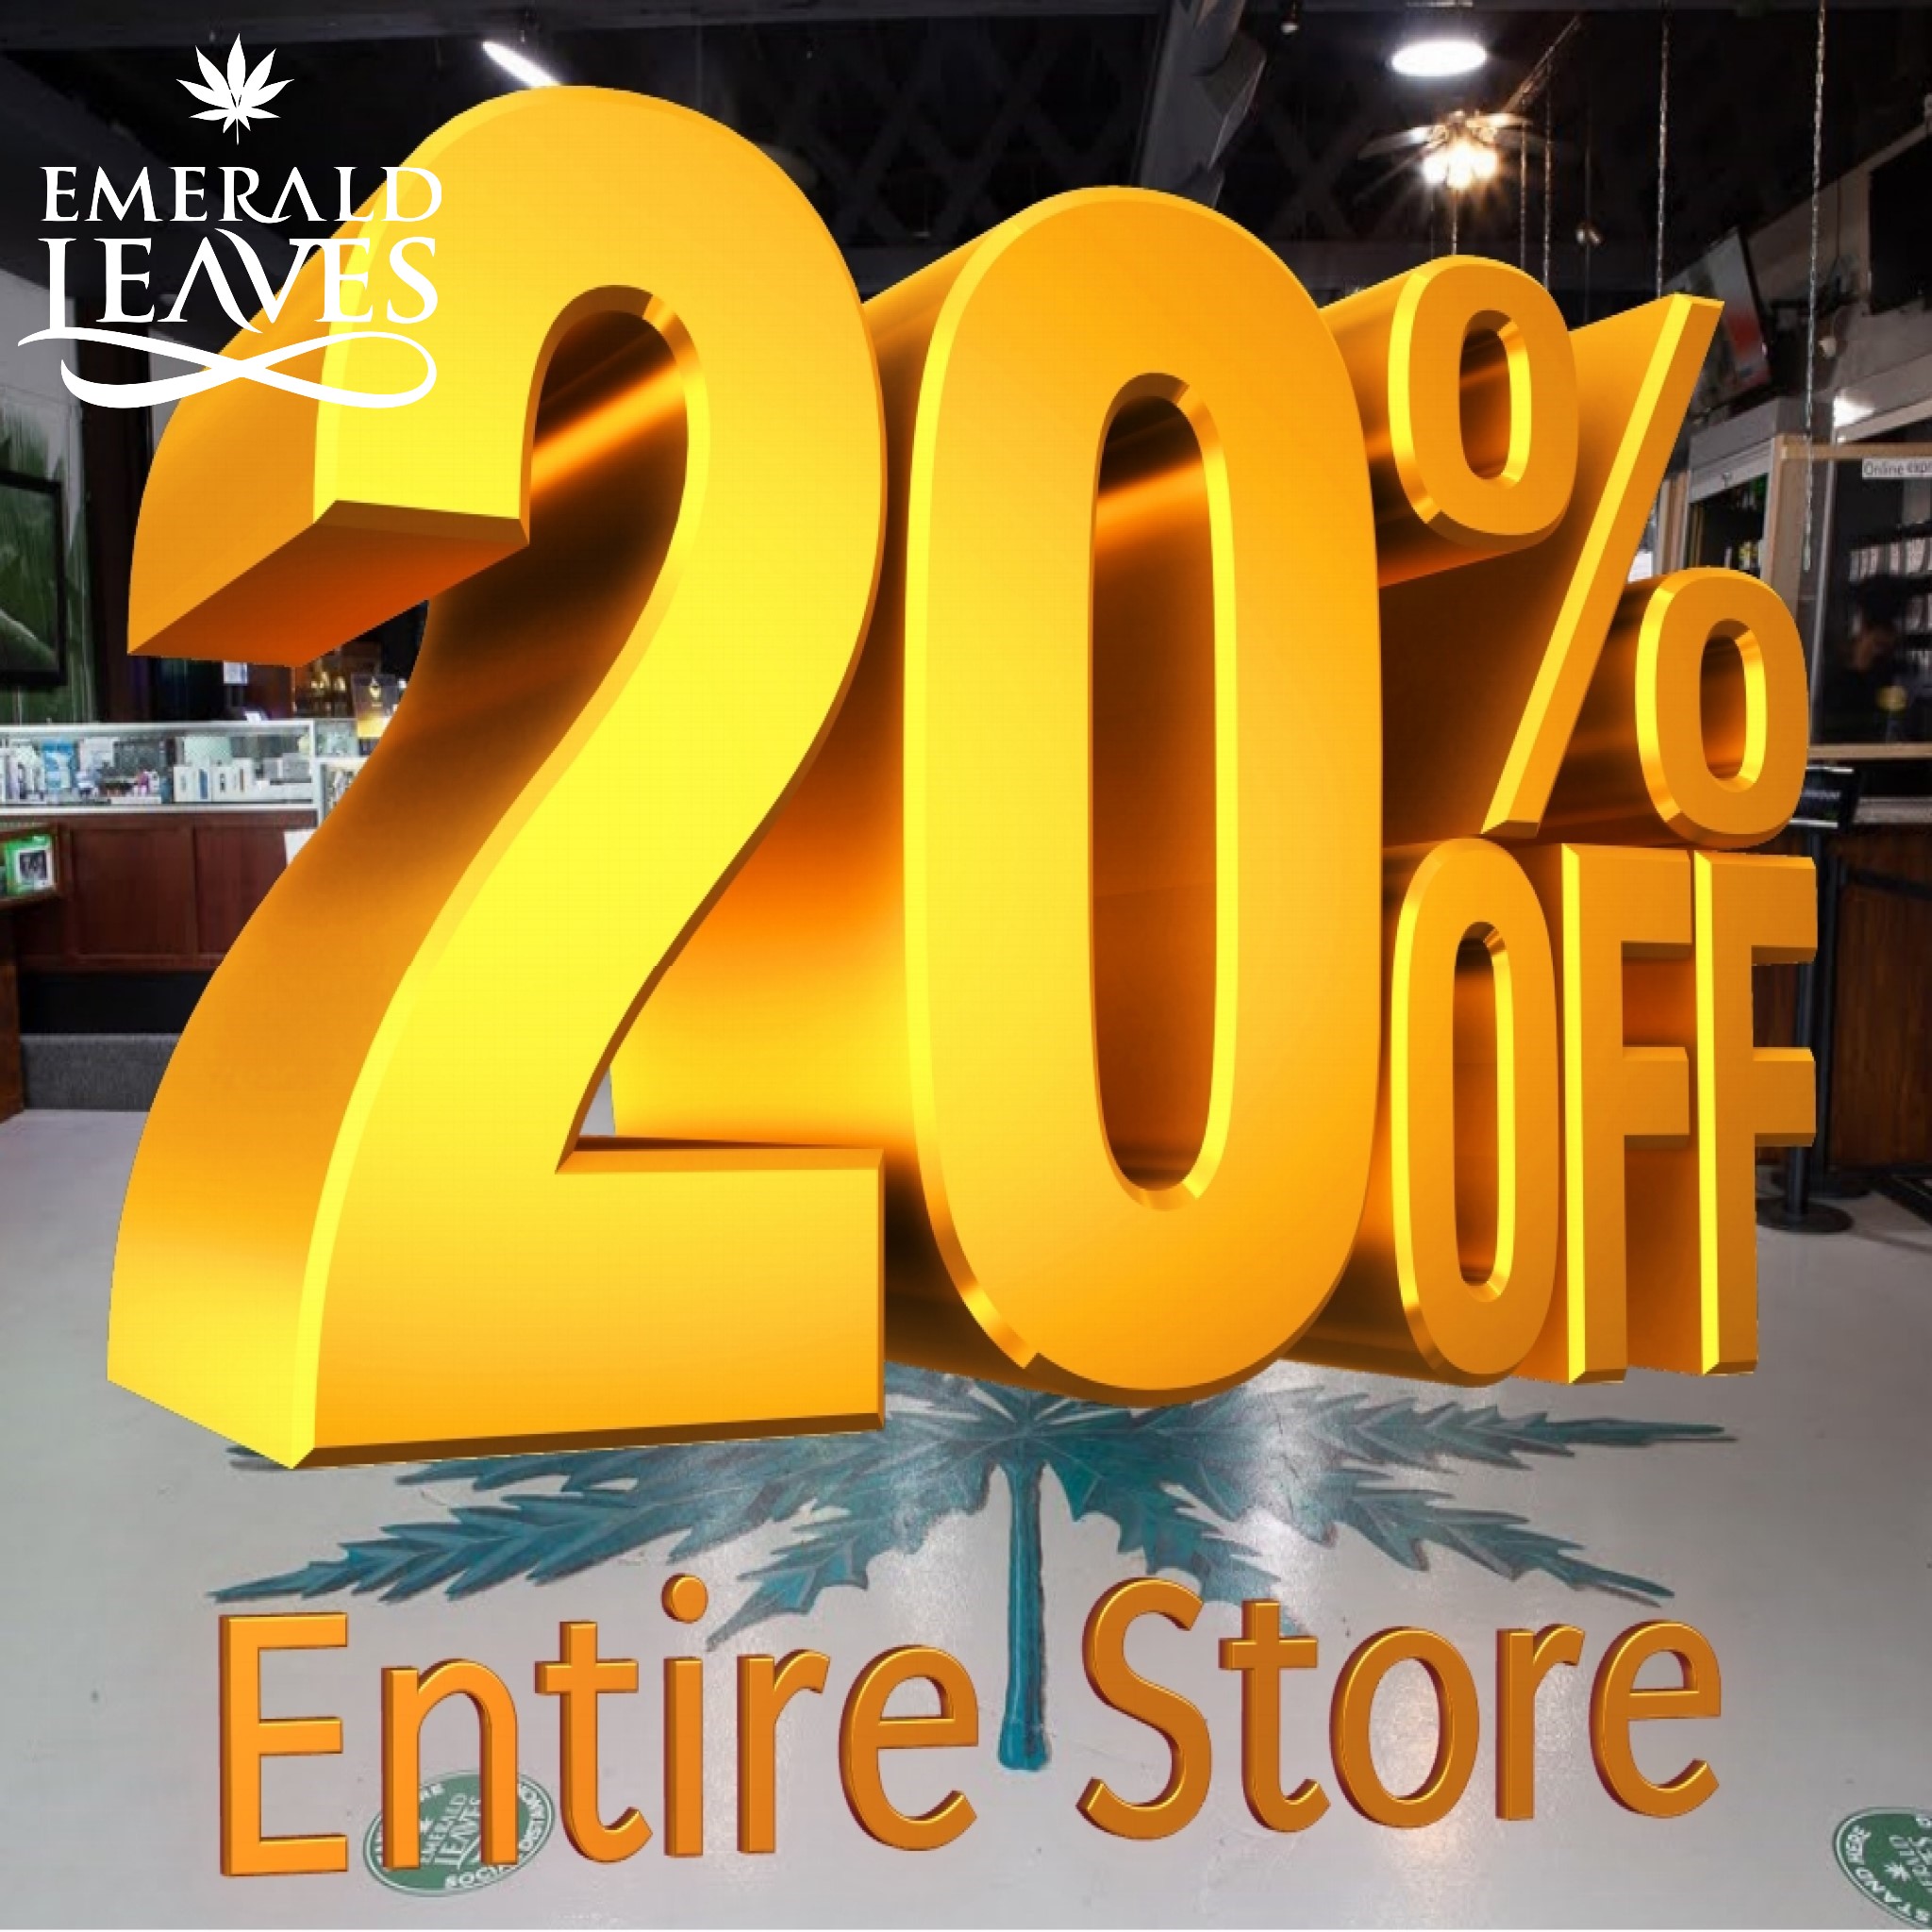 Emerald Leaves - Tacoma's Leading Recreational Cannabis Store